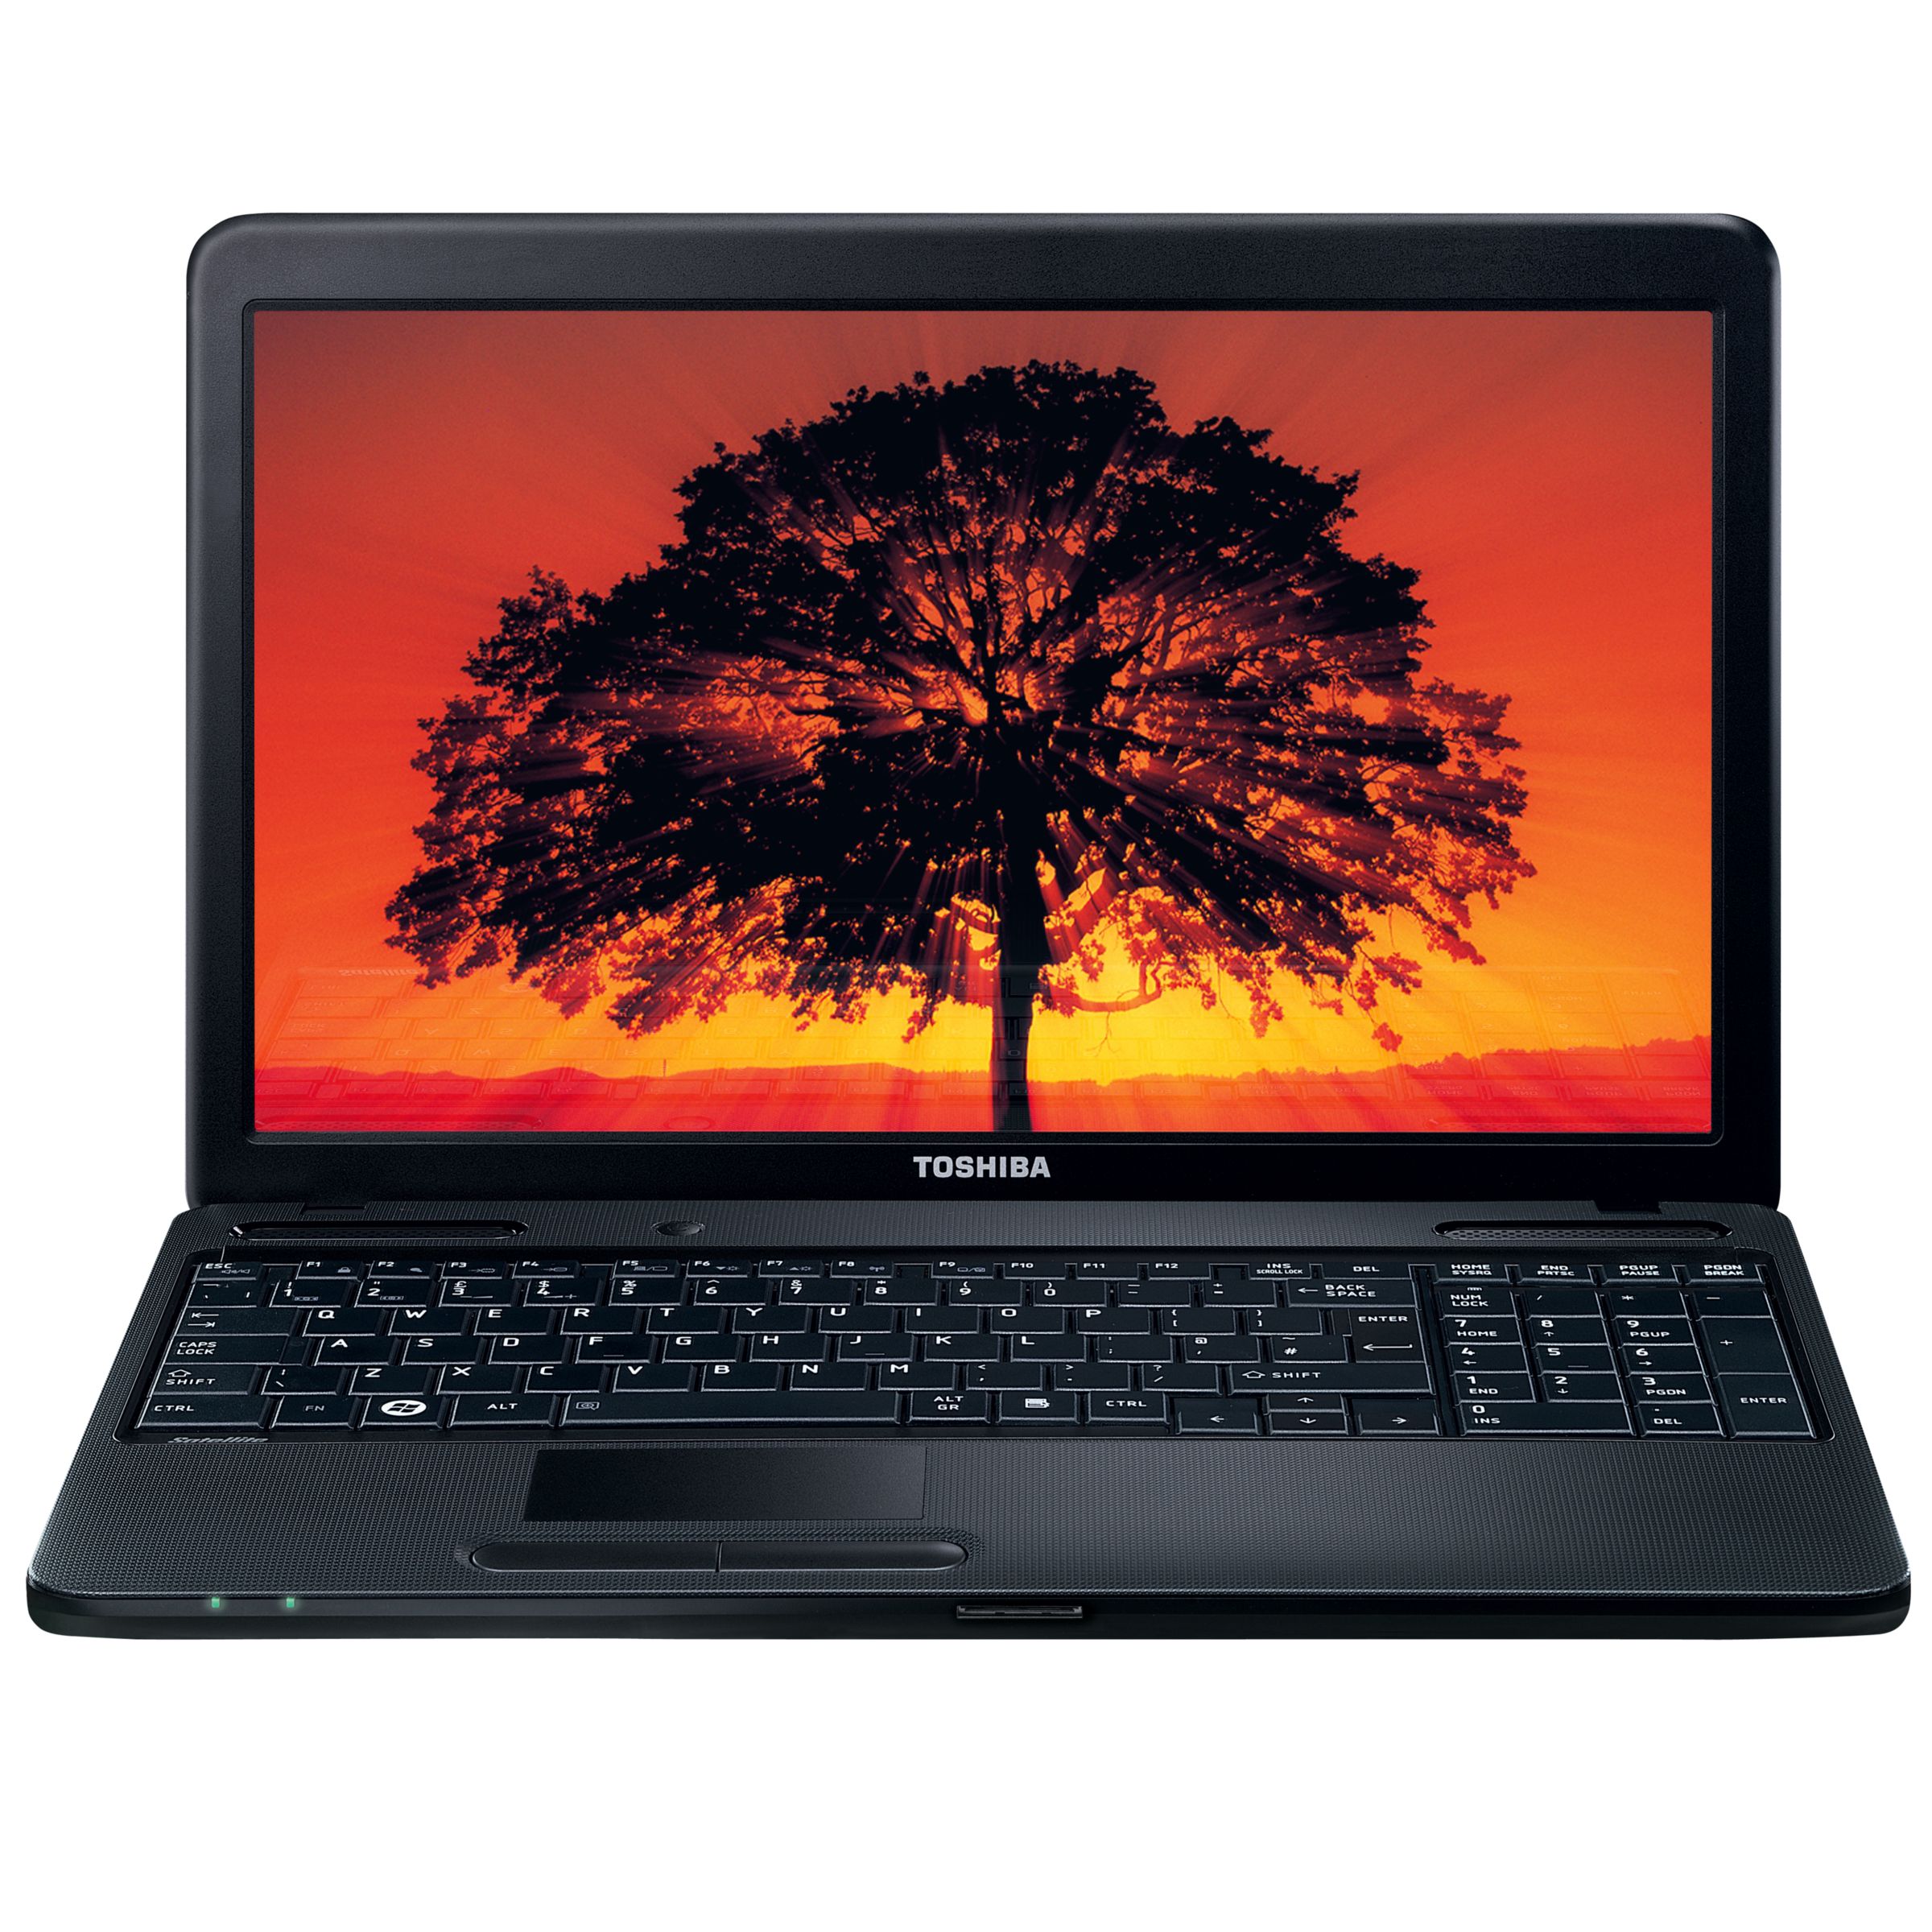 Toshiba Satellite C660-174 Laptop, Intel® Core™ i3, 250GB, 2.3GHz, 3GB RAM with 15.6 Inch Display at John Lewis